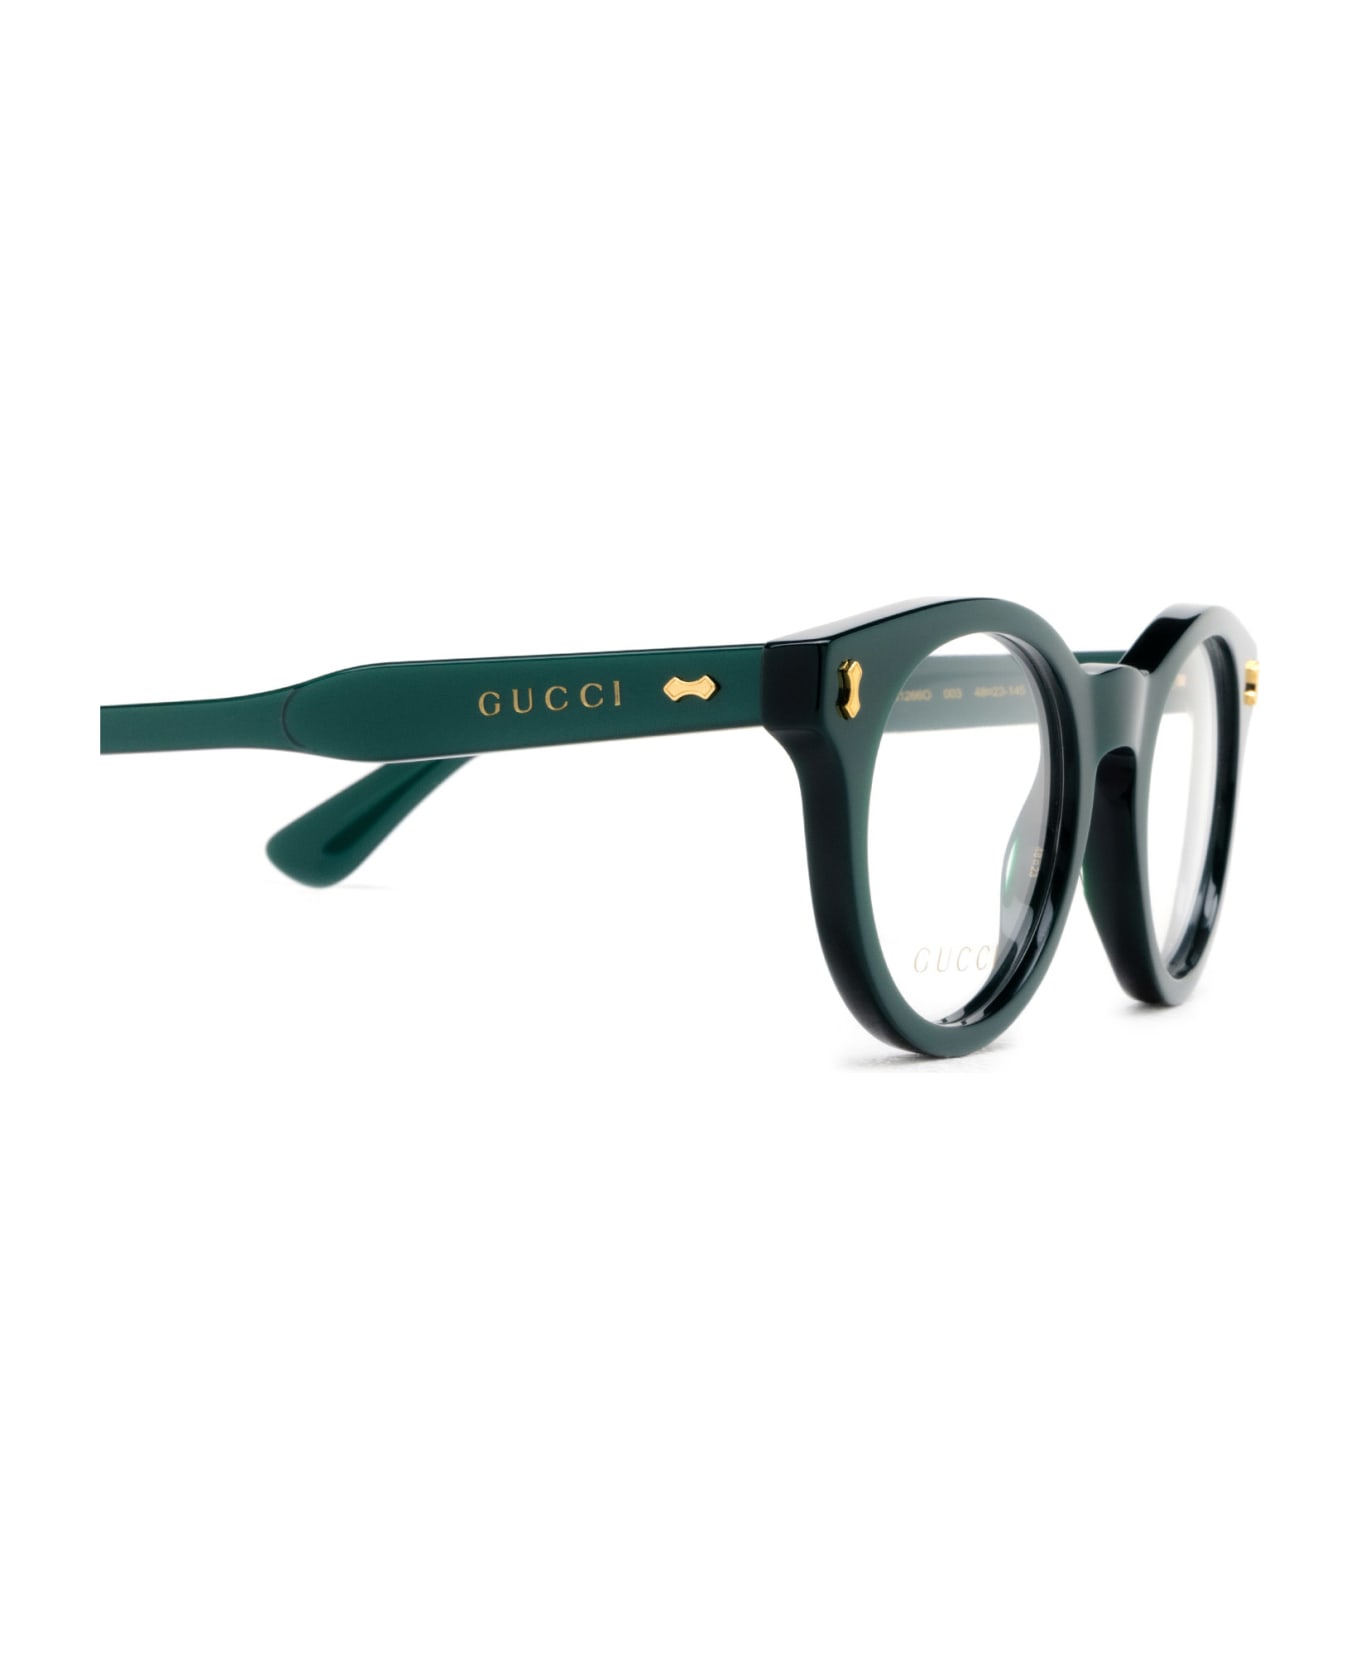 Gucci Eyewear Gg1266o Green Glasses - Green アイウェア